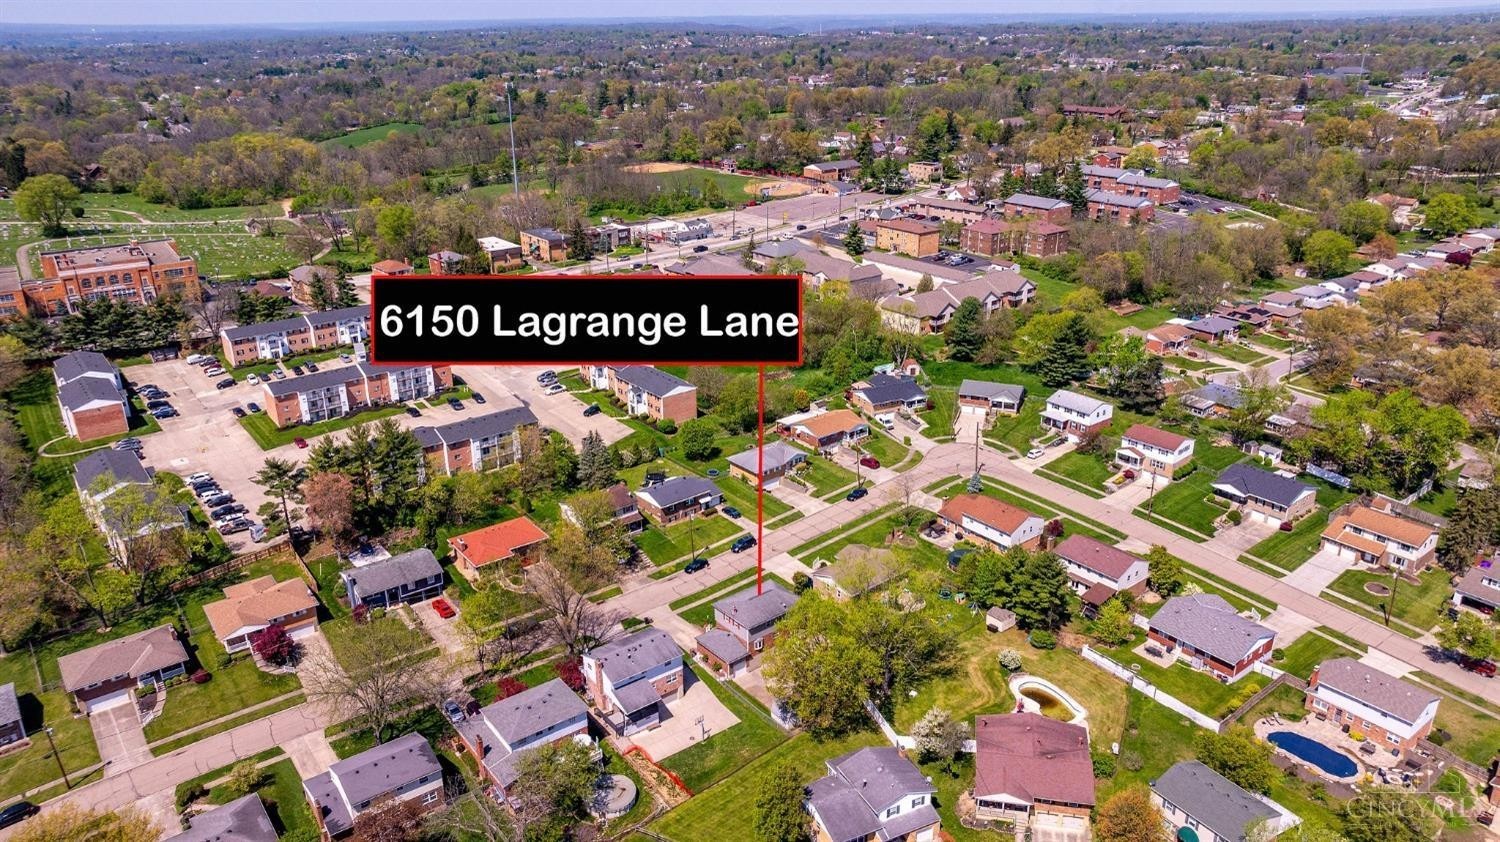 46. 6150 Lagrange Lane